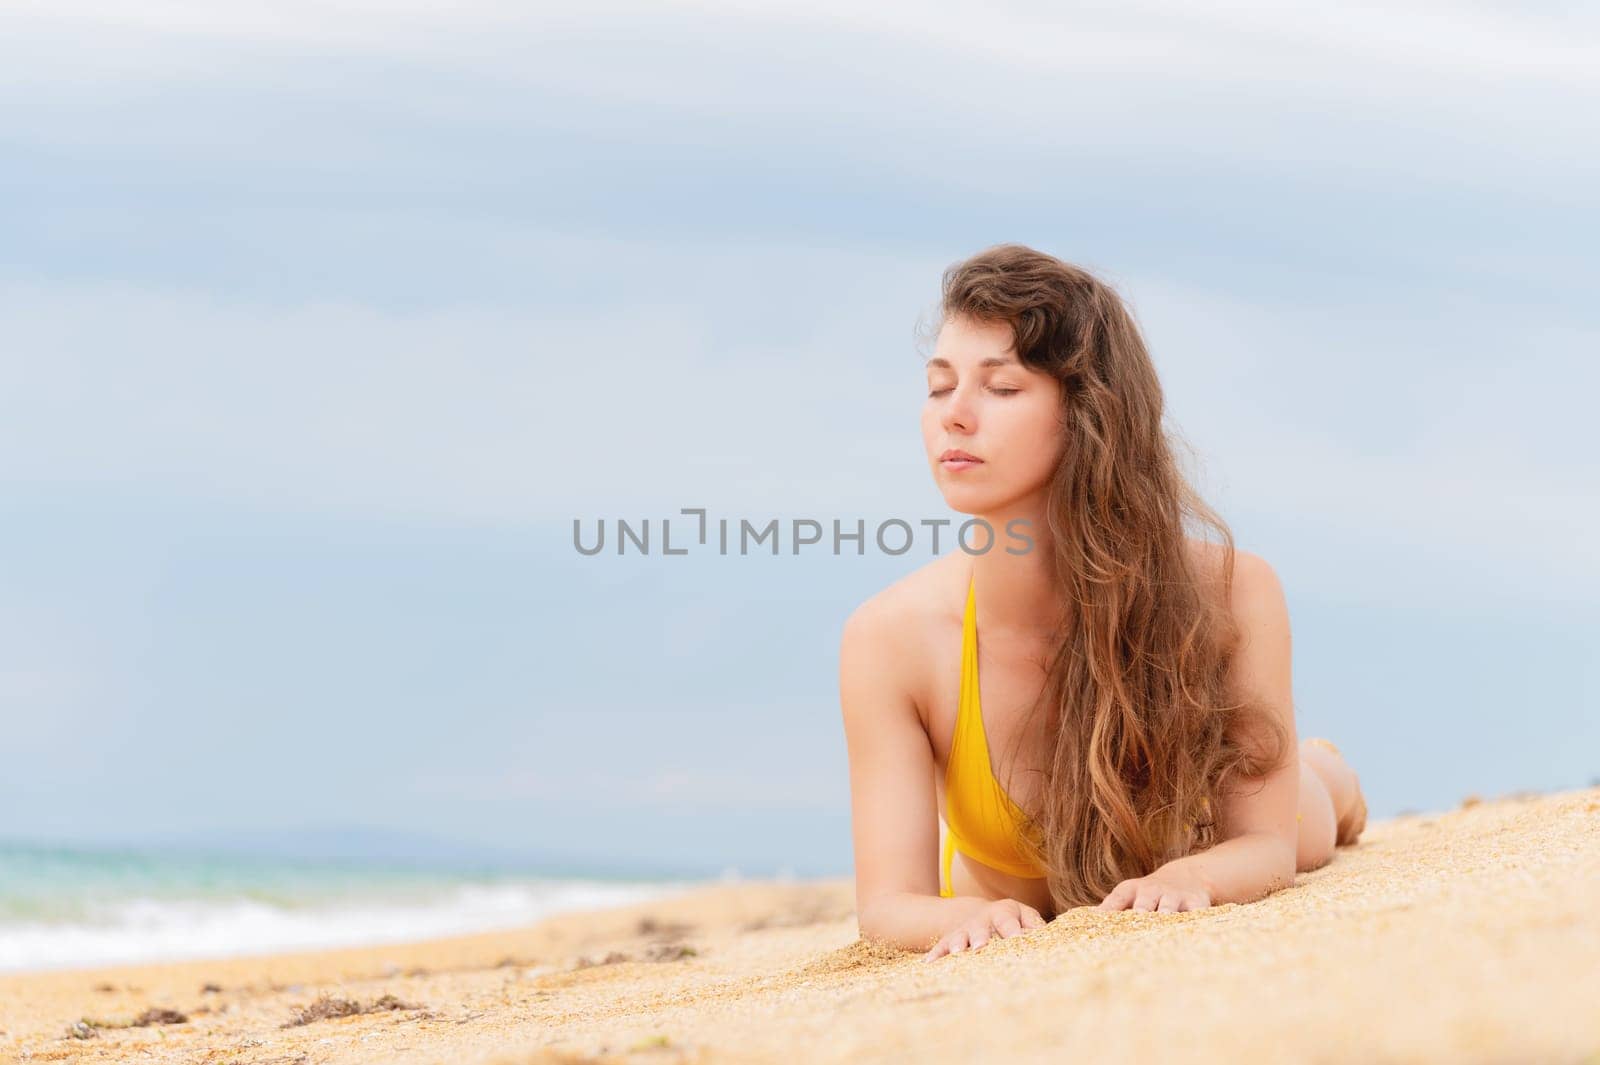 Beautiful woman with perfect body lies on sandy beach, wearing yellow bikini, sunbathing at beach resort, enjoying summer vacation by yanik88